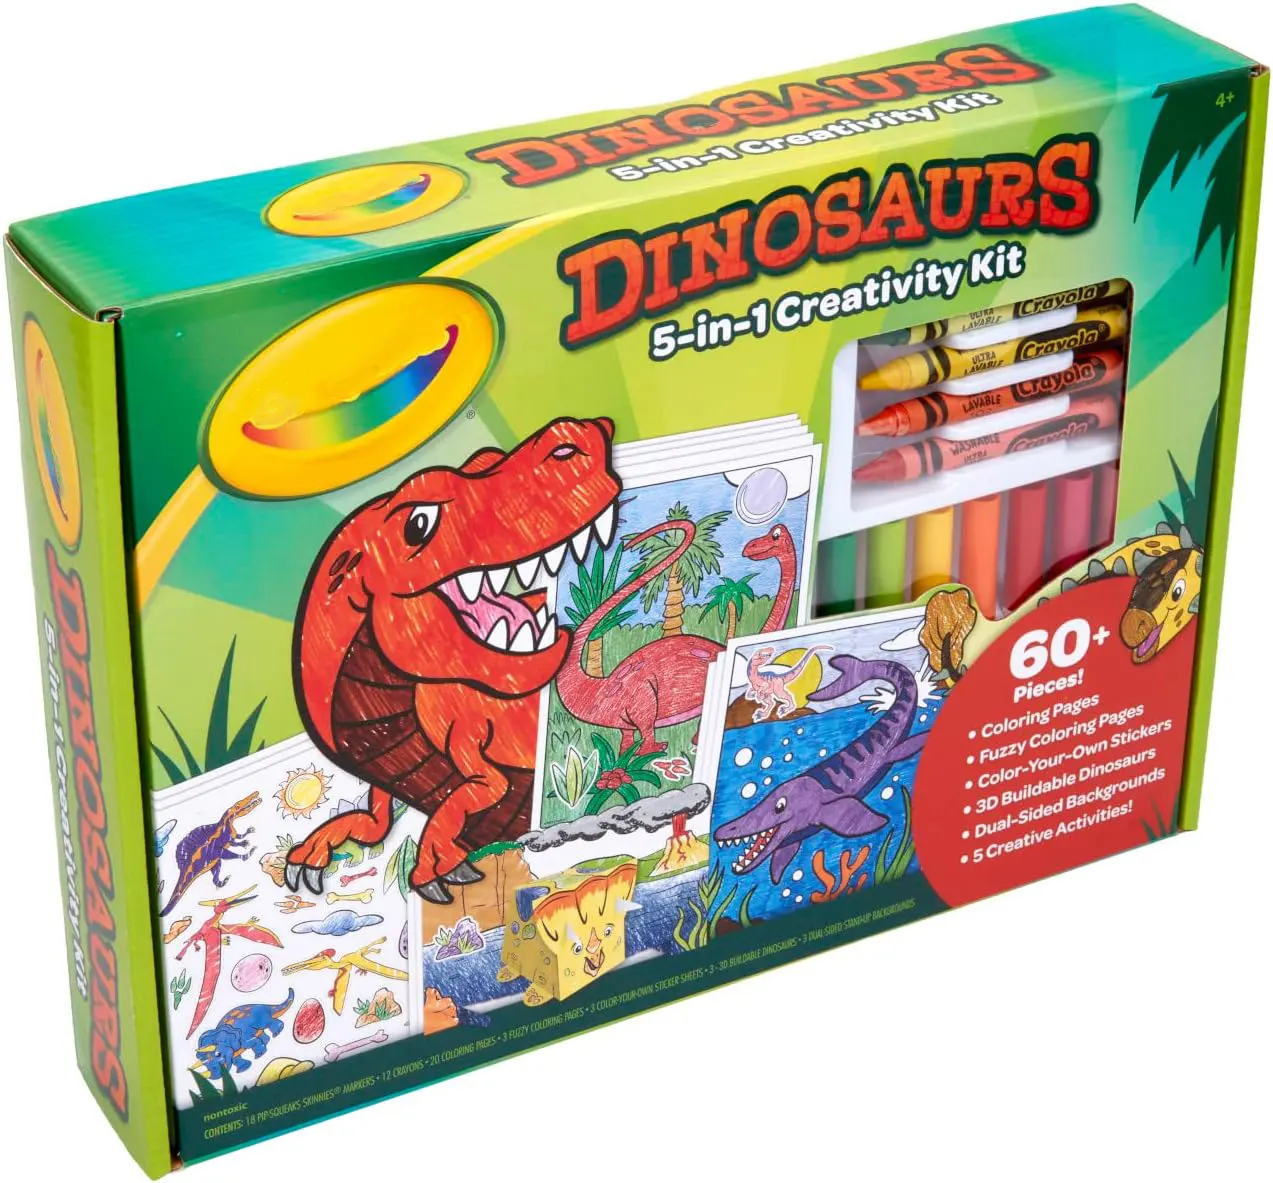 5-in-1 creativiyt kit Dinosaur theme Art Set crayon Kit with Markers Art Supplies for Kids